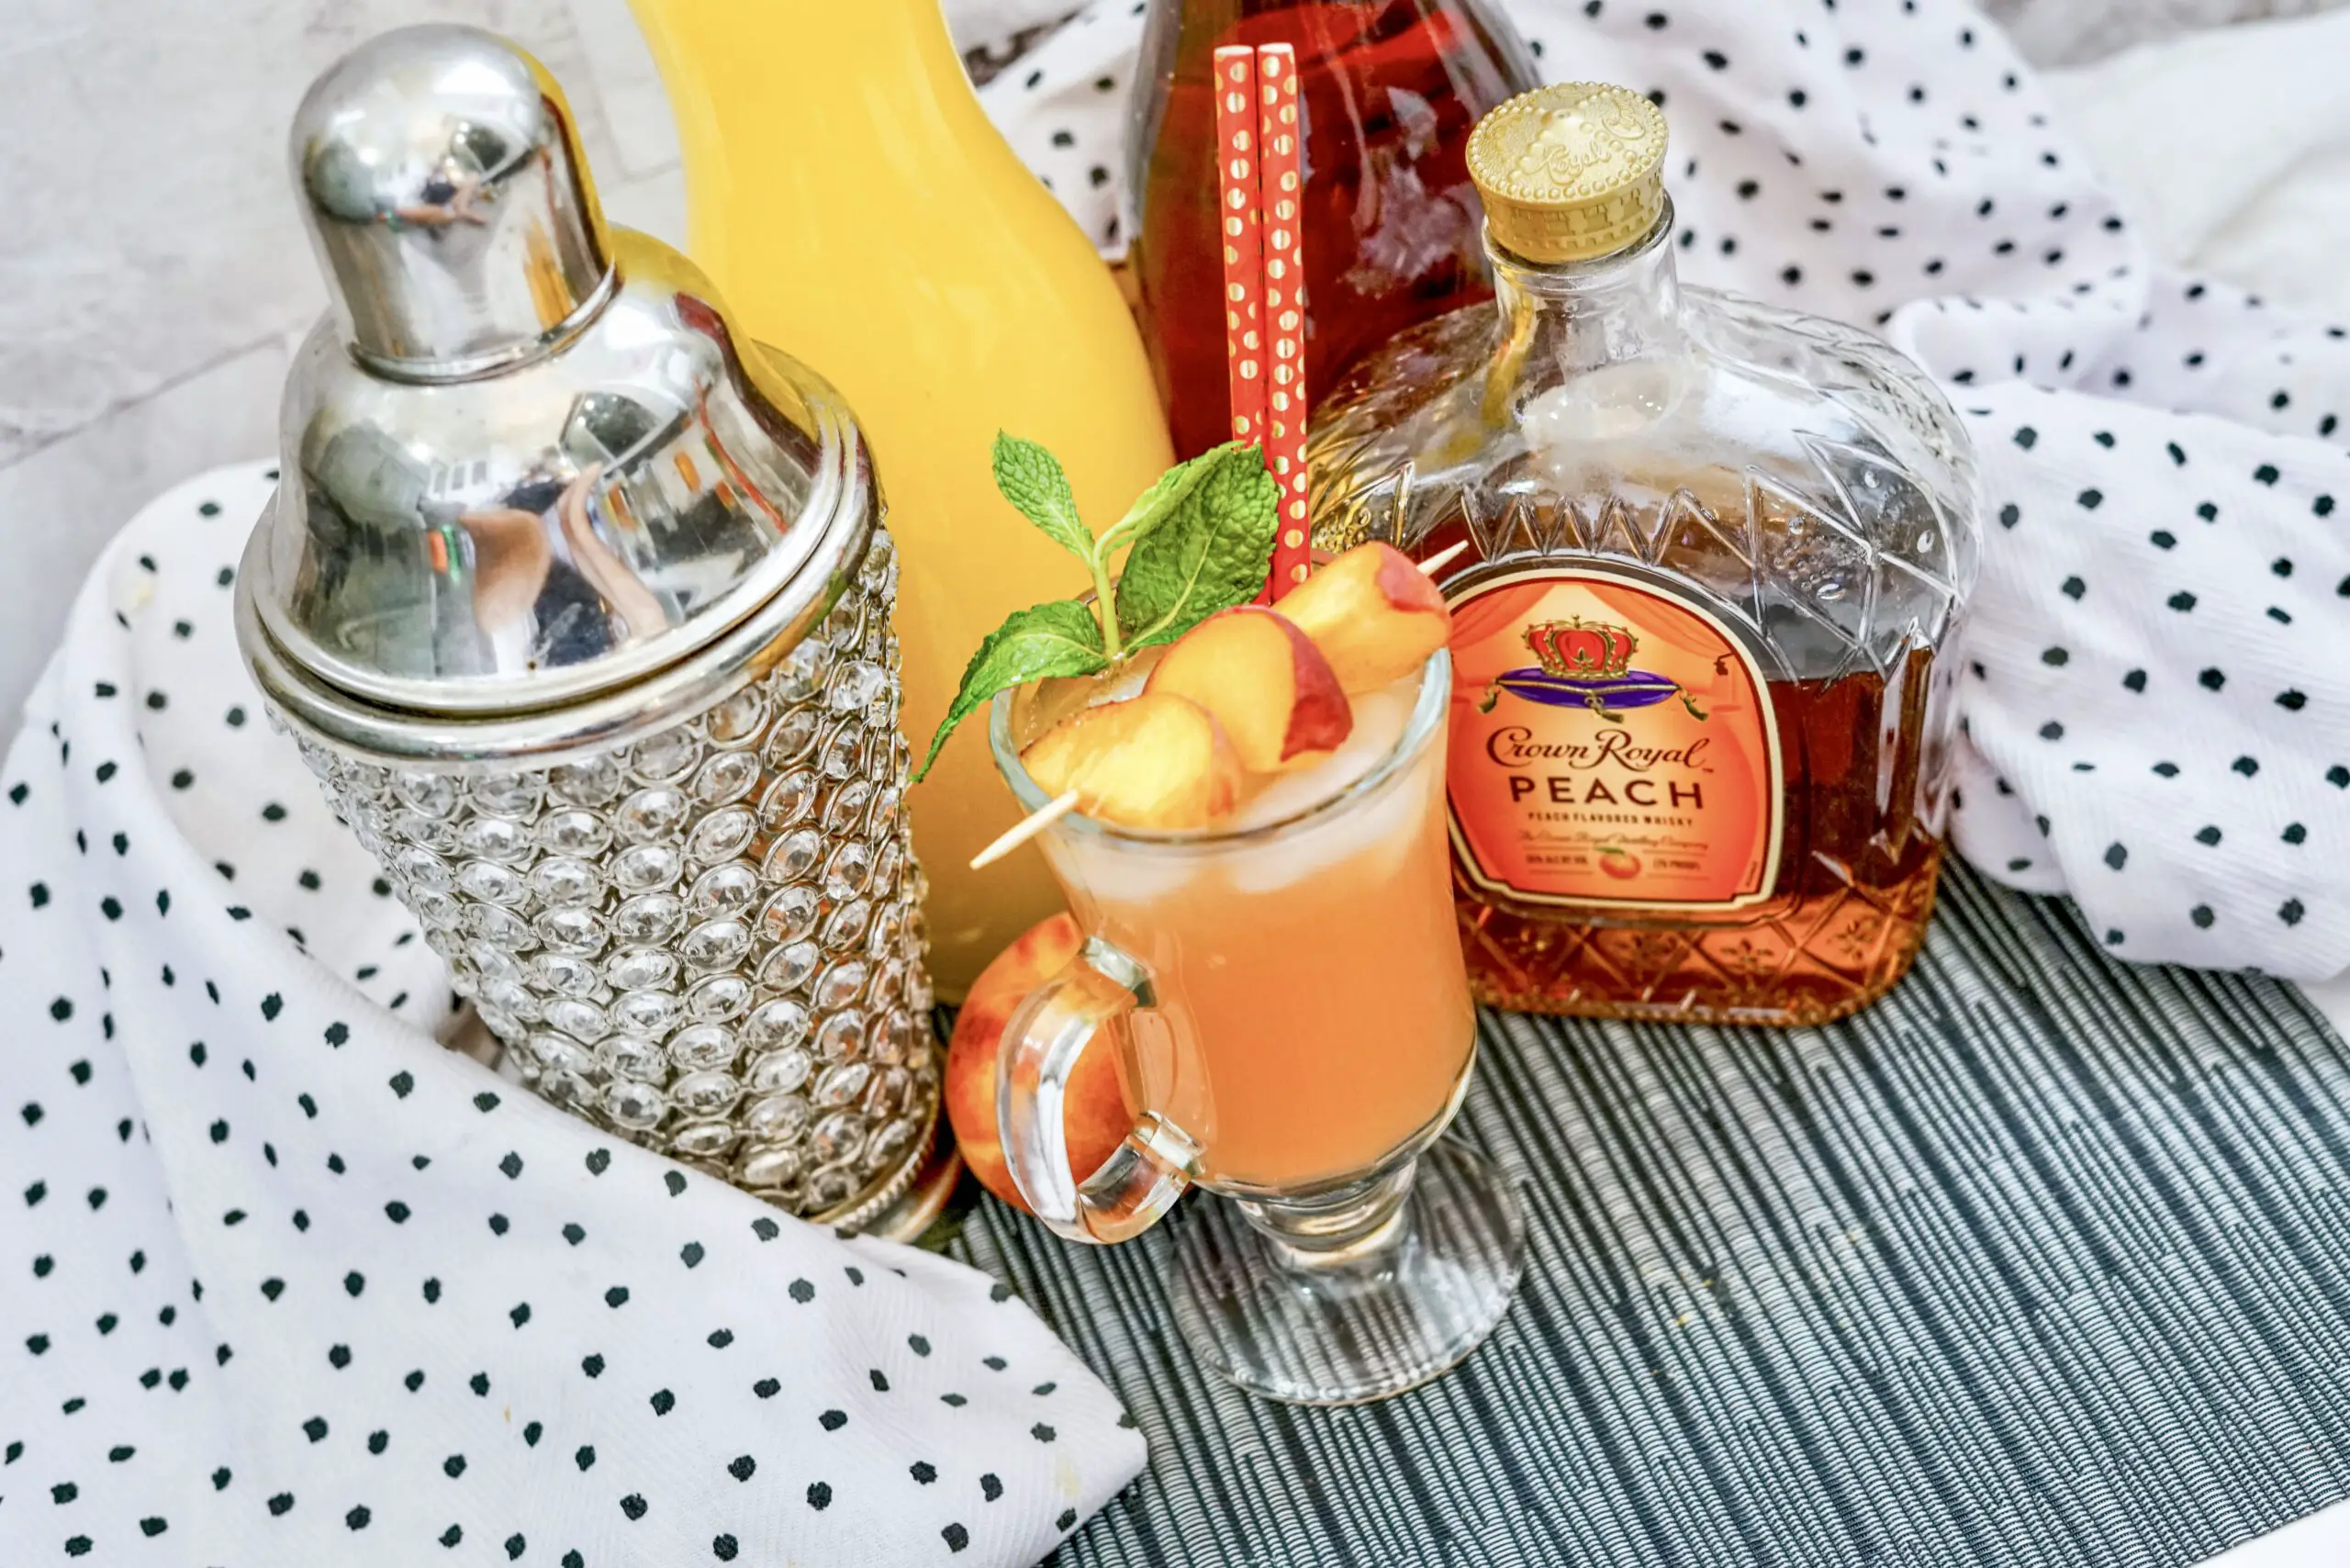 Royal Peack Cocktail